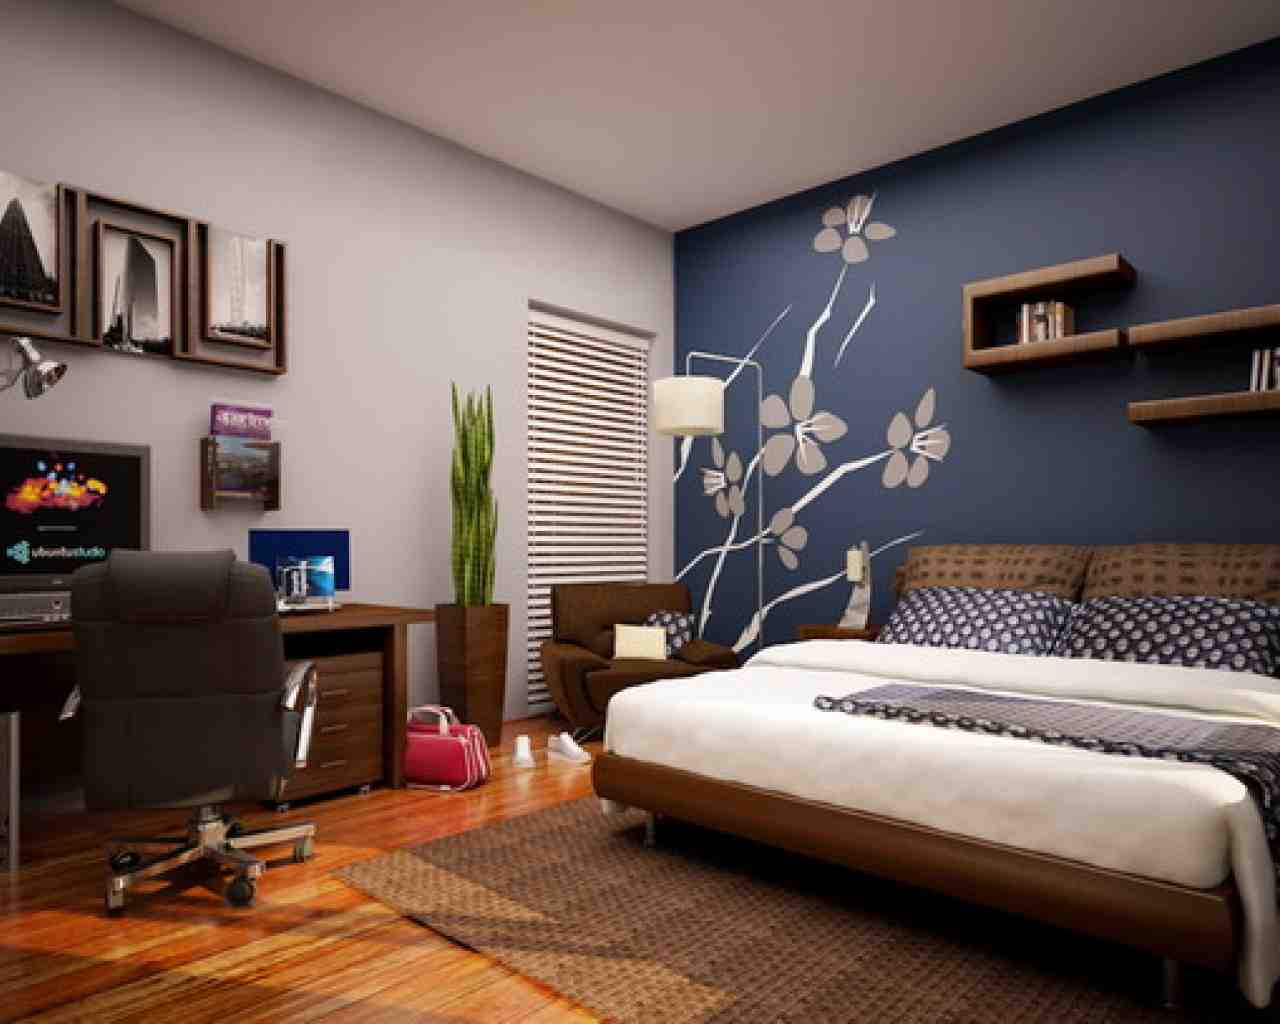 Decorating Your Bedroom Walls